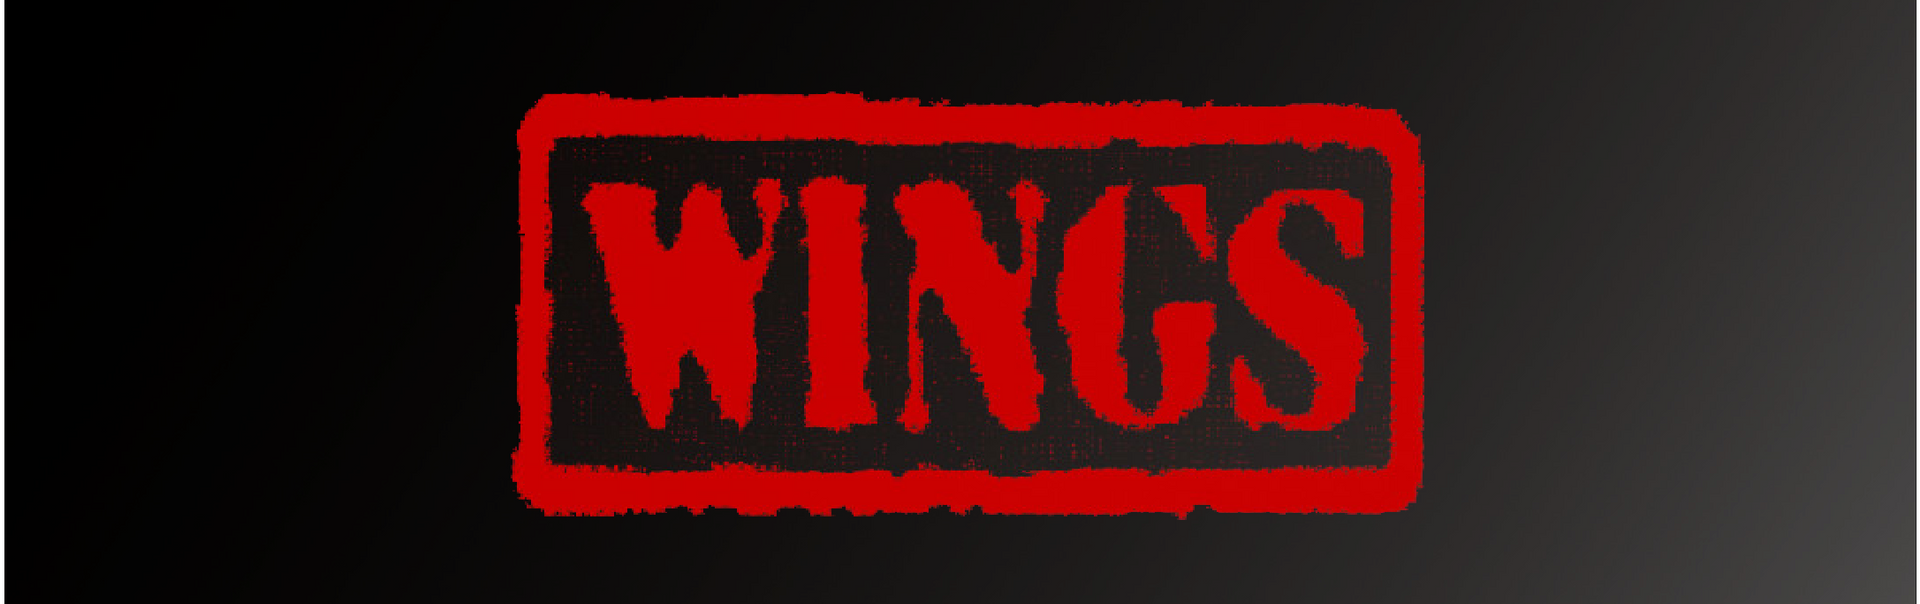 Wings chicken  restaurant logo www.completelynormalmedia.com